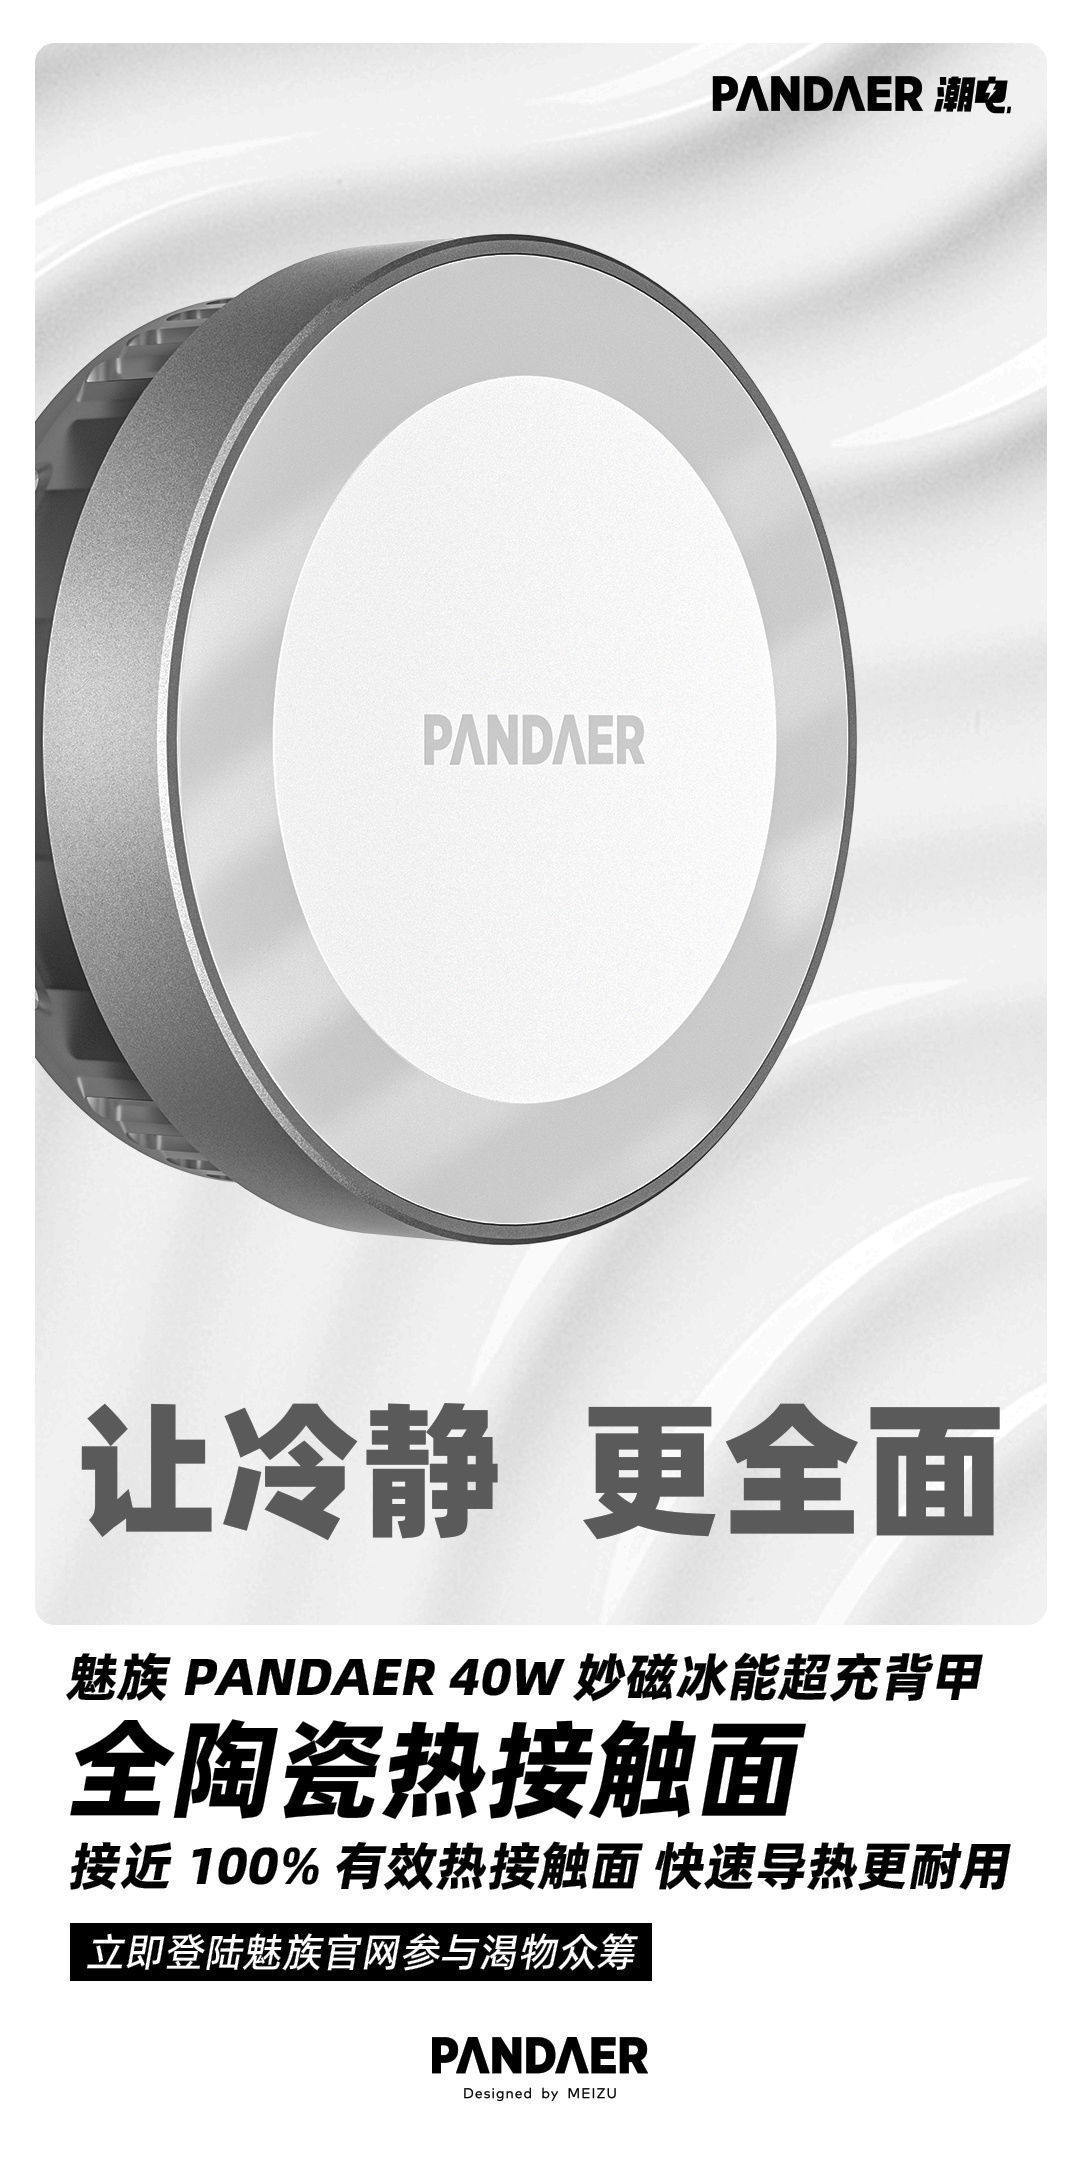 it|魅族 PANDAER 40W 妙磁冰能超充背甲众筹，269 元